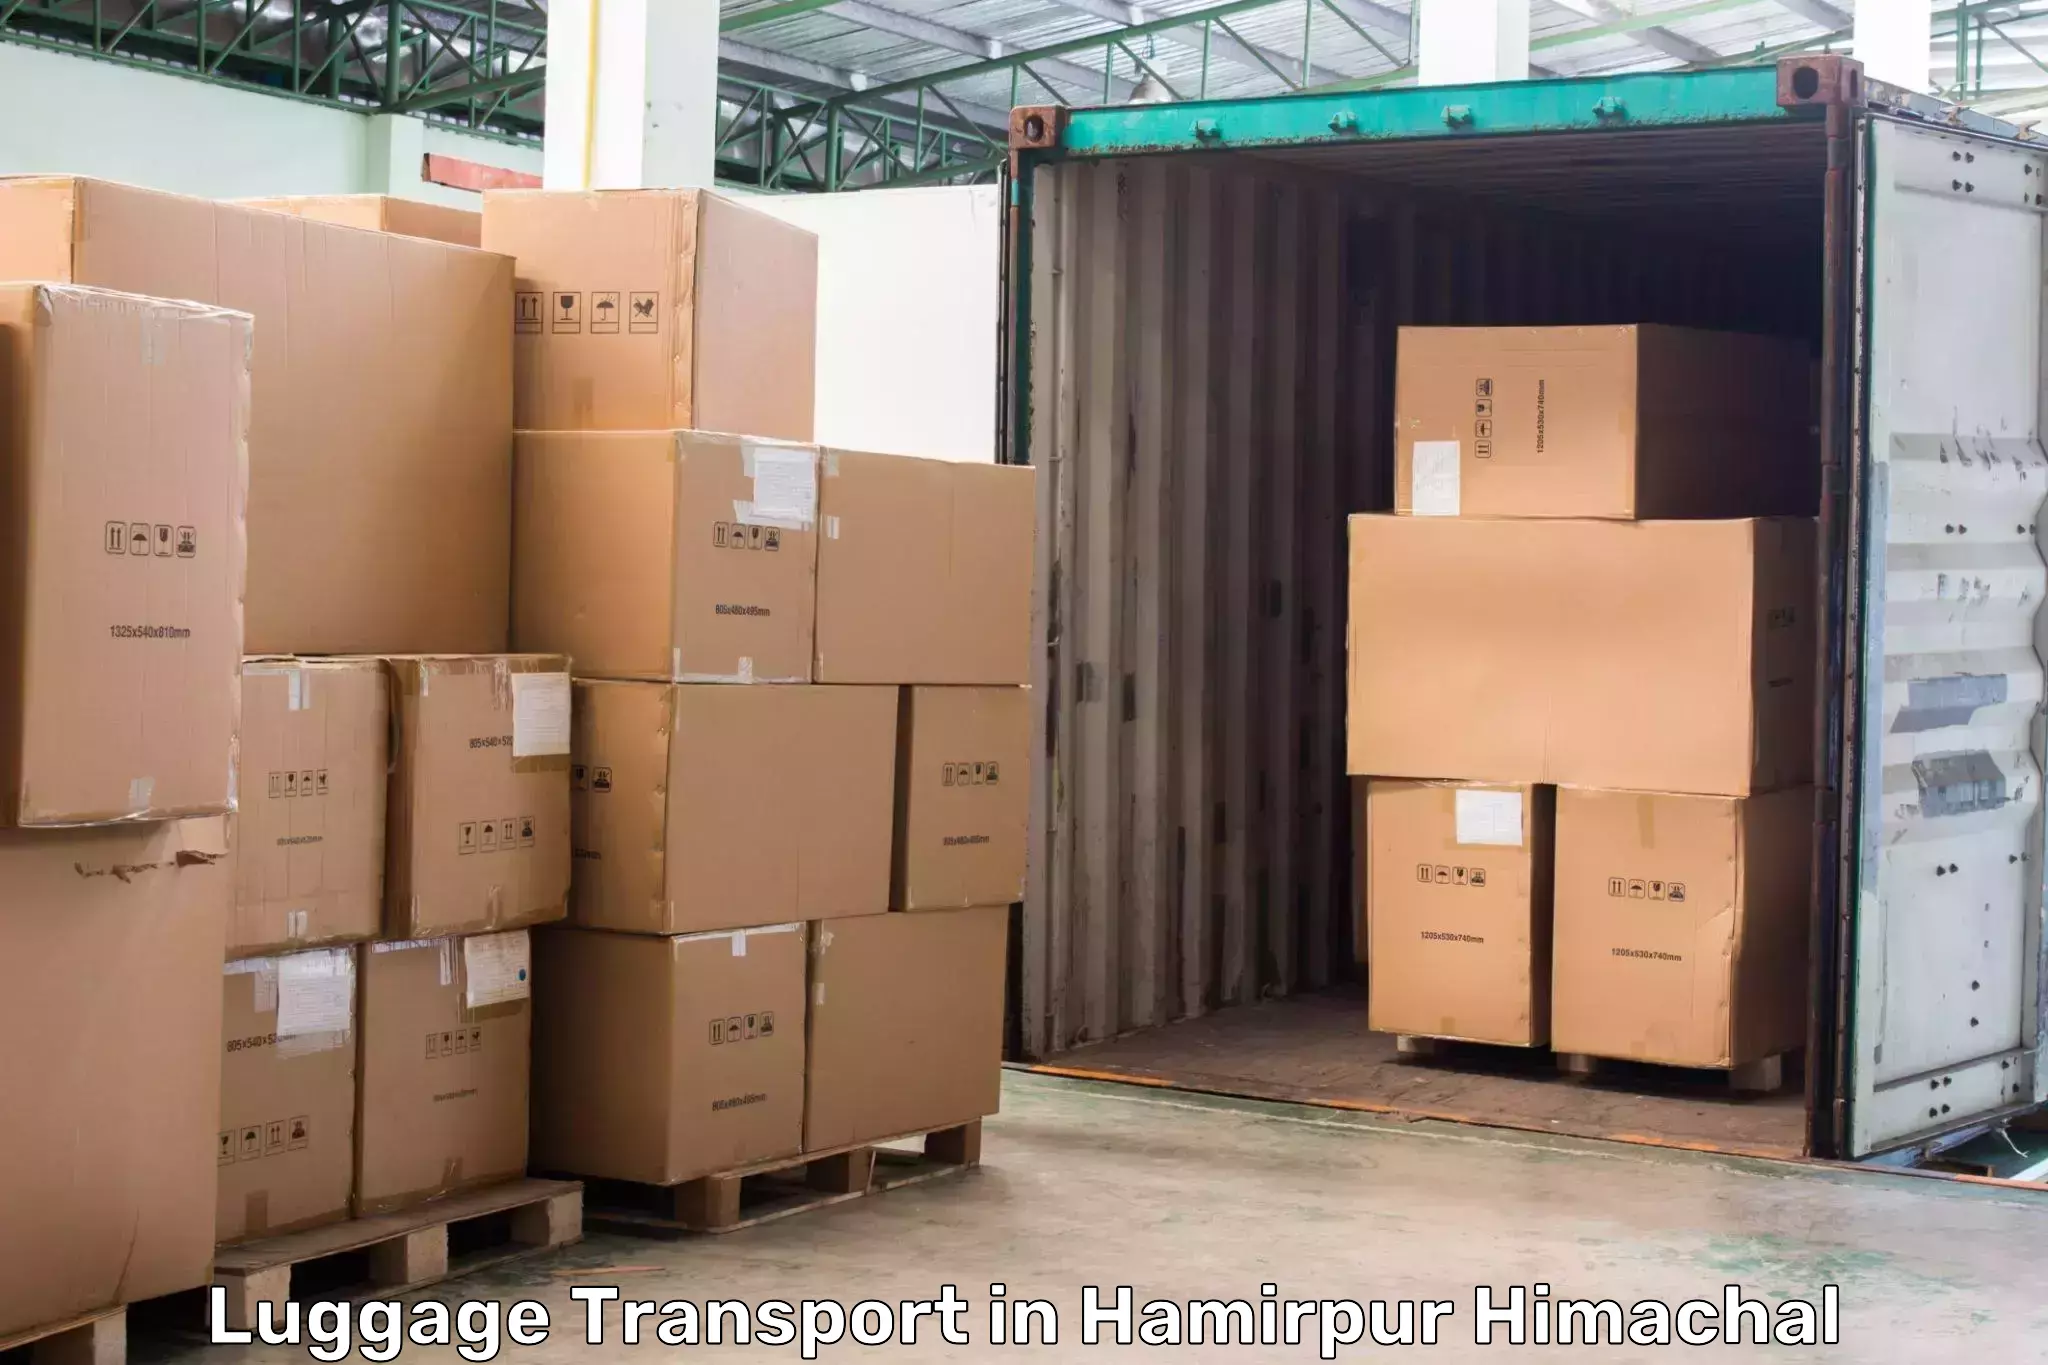 Luggage transport service in Hamirpur Himachal